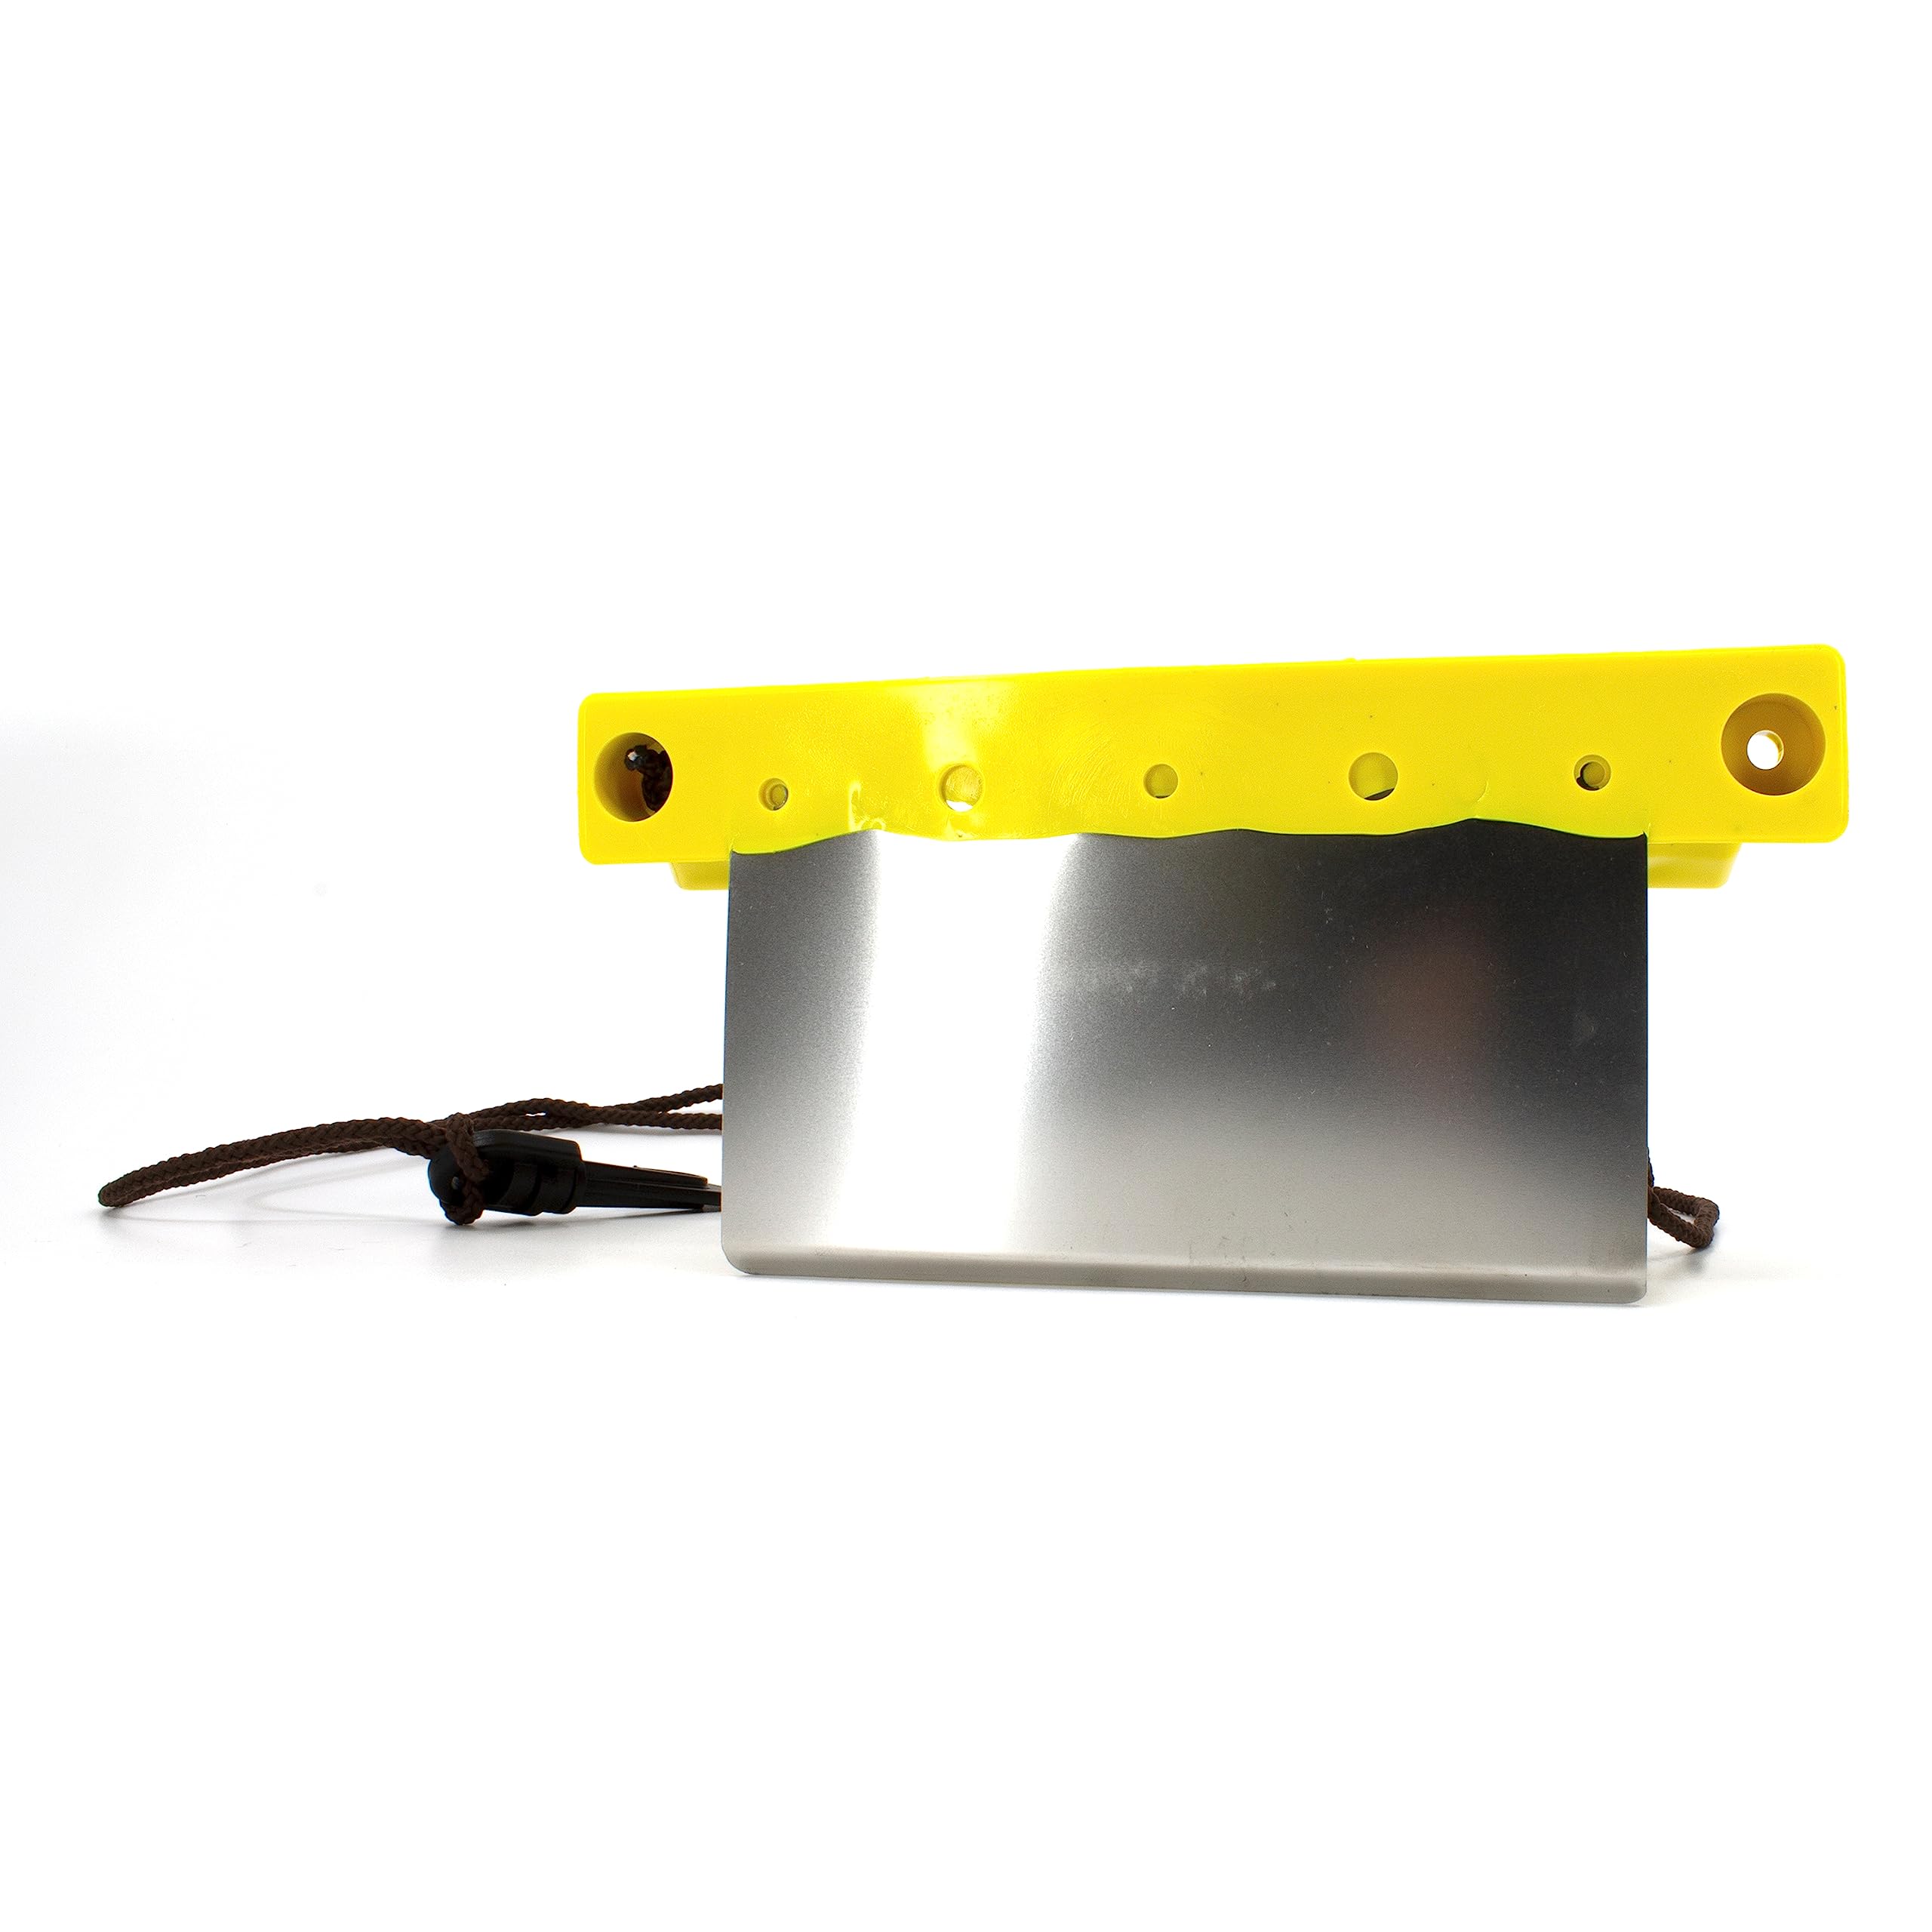 MIDWEST Tab Rail Remover - Easy Vinyl Fence Repair Tool with Locking Tabs & Rail Removing Blades - MWT-TRR-46